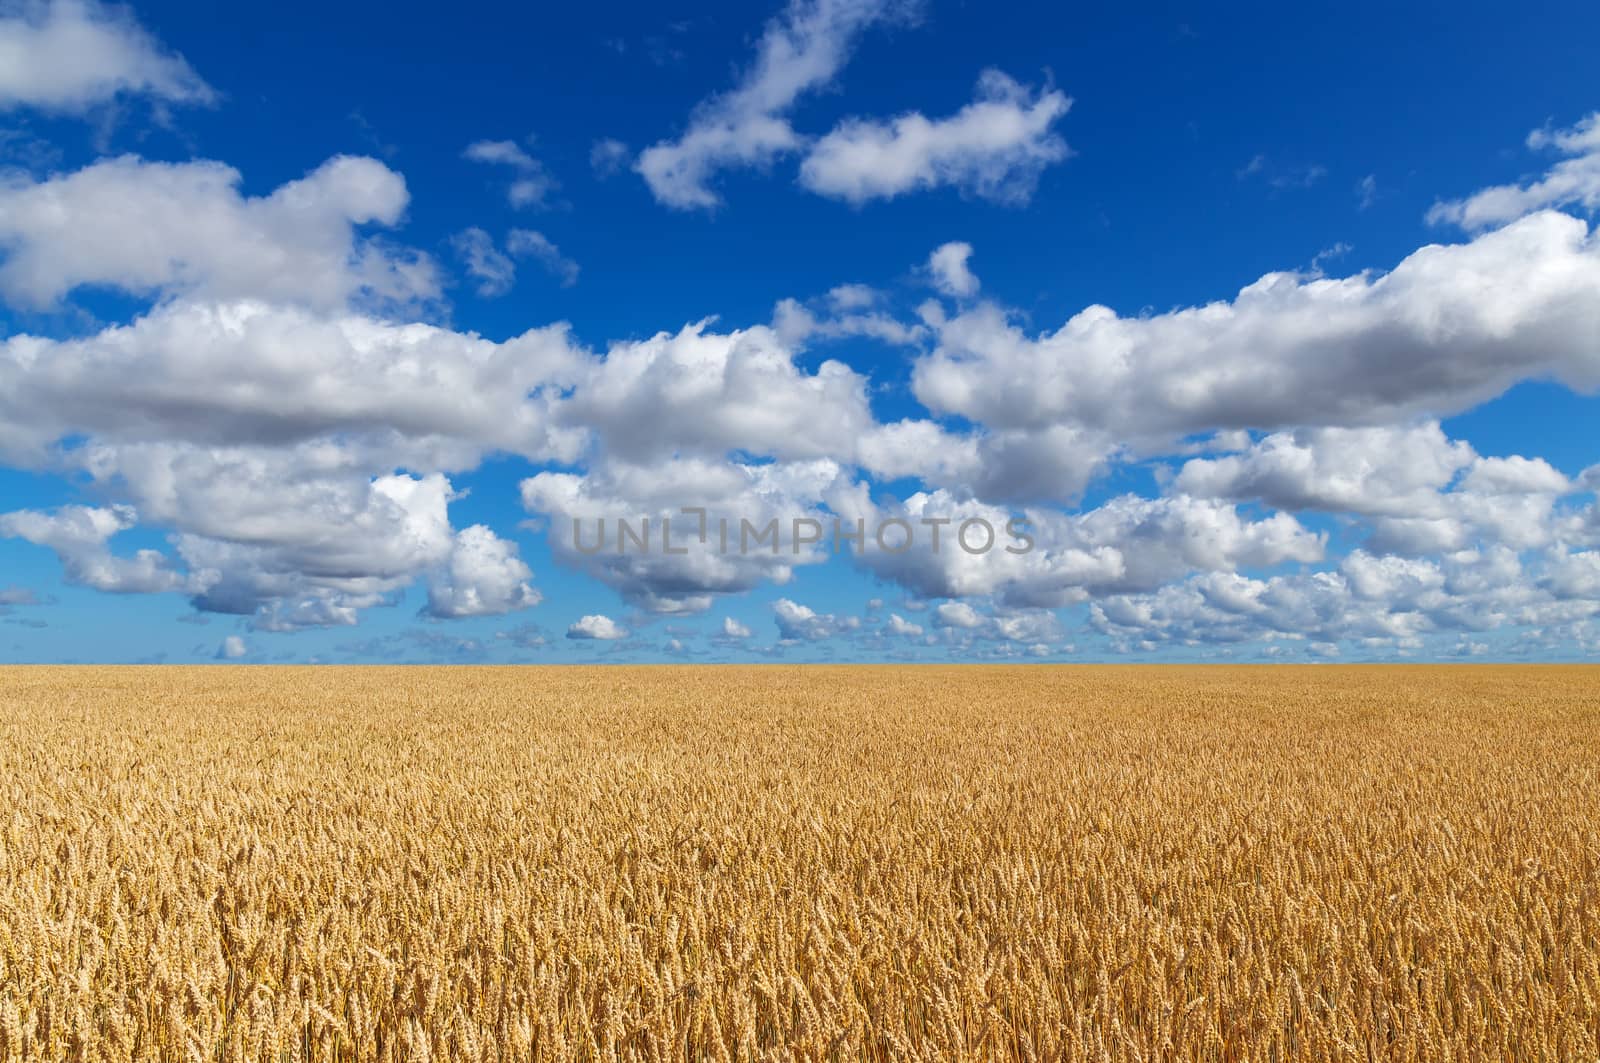 Golden wheat field under blue sky by anikasalsera